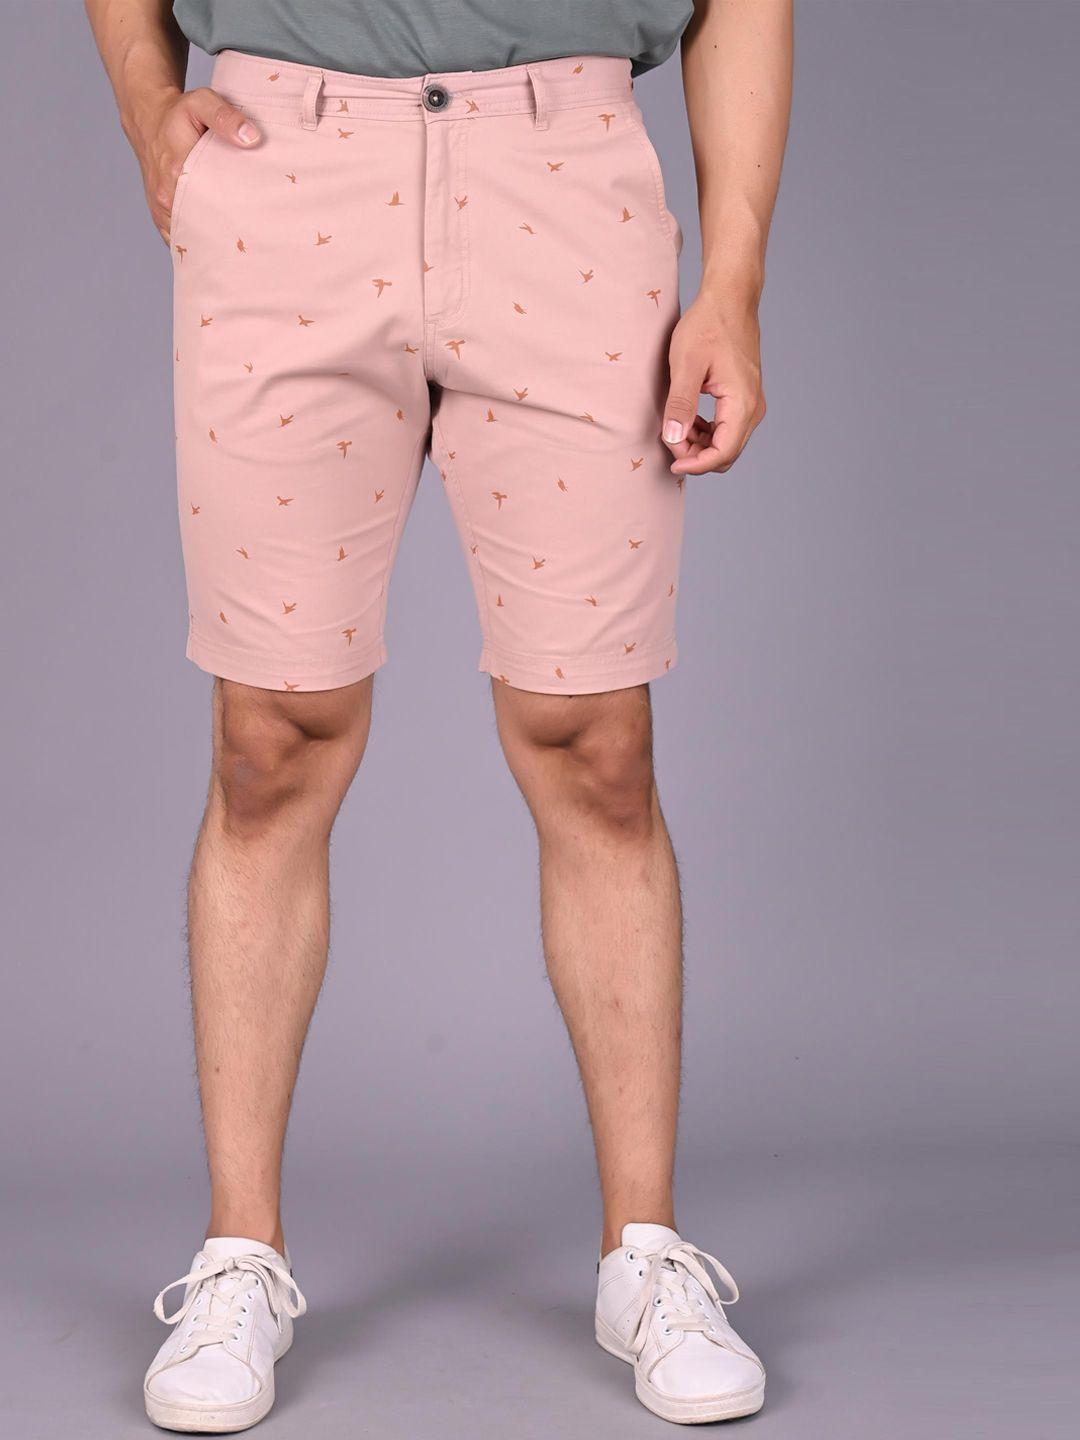 aristitch-men-conversational-printed-mid-rise-cotton-sports-shorts